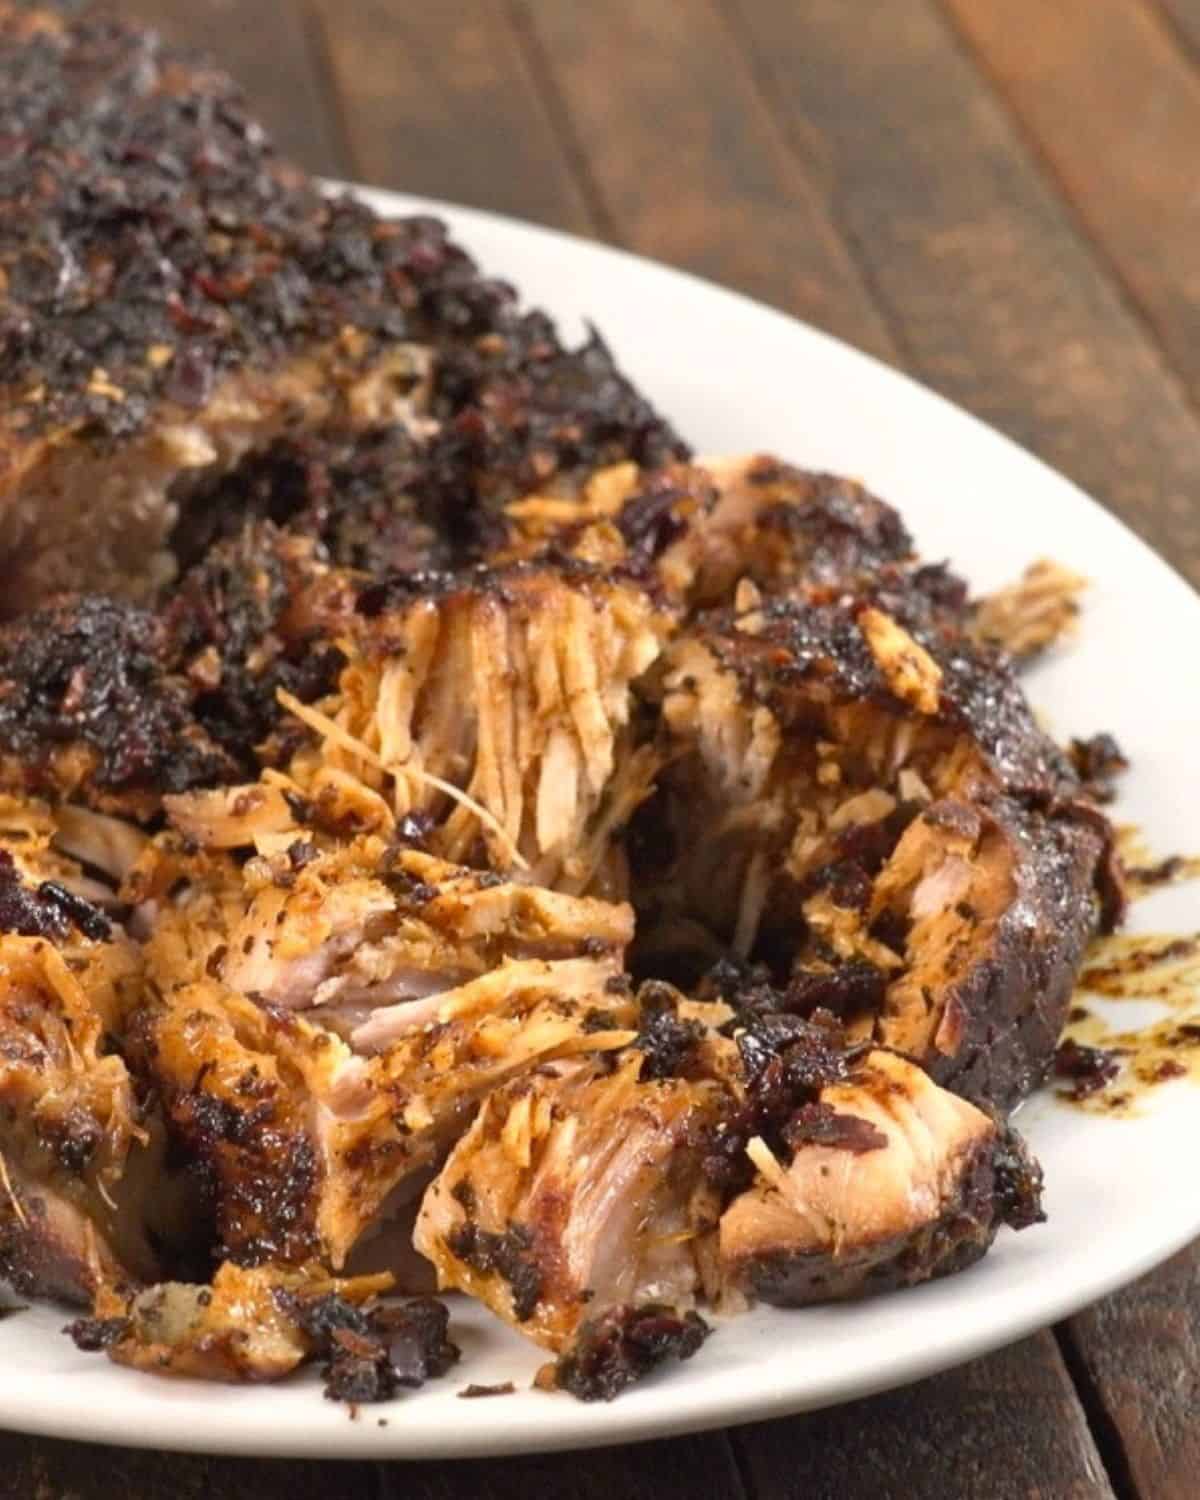 Slow cooker honey pork roast on platter with sauce.